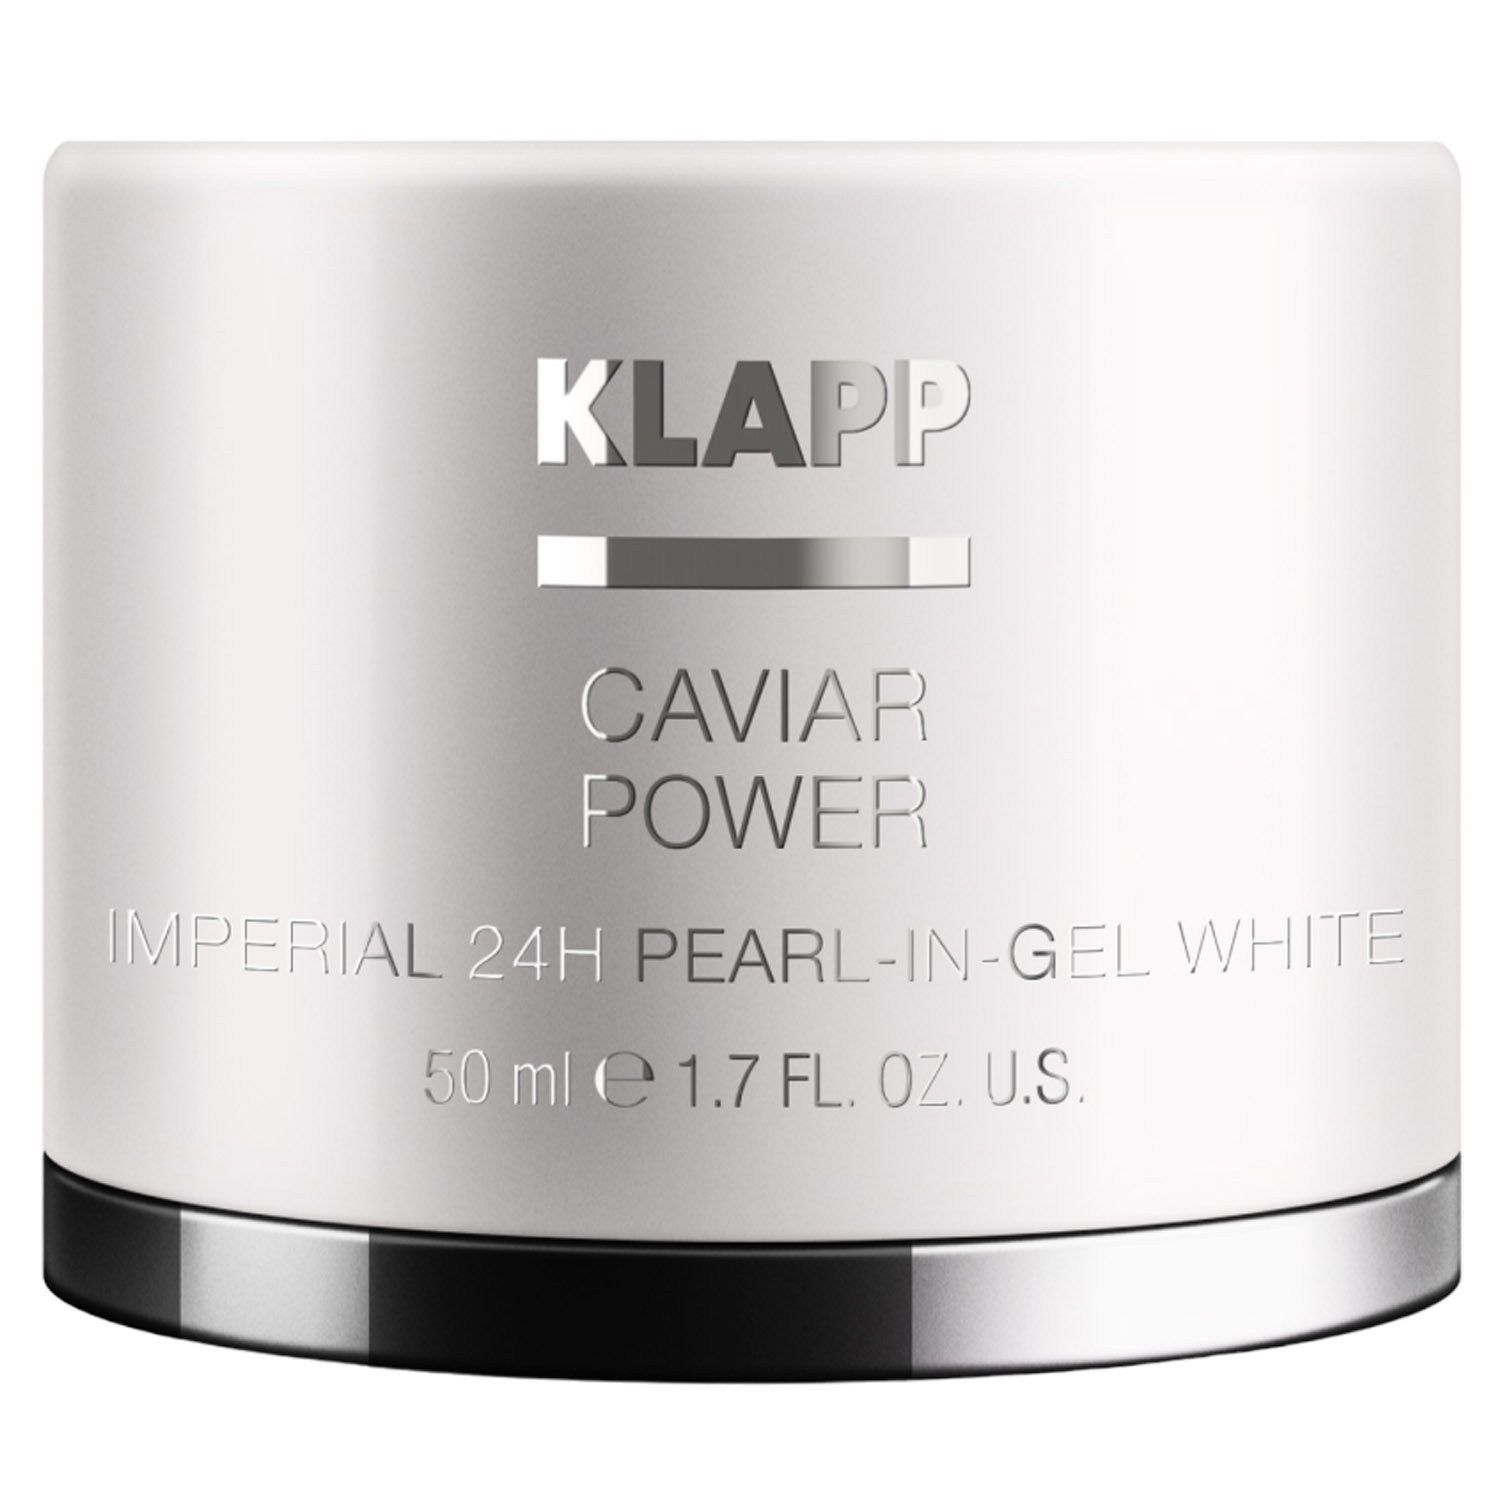 Крем для обличчя Klapp Caviar Power Imperial 24H Pearl-in-Gel White, 50 мл - фото 1